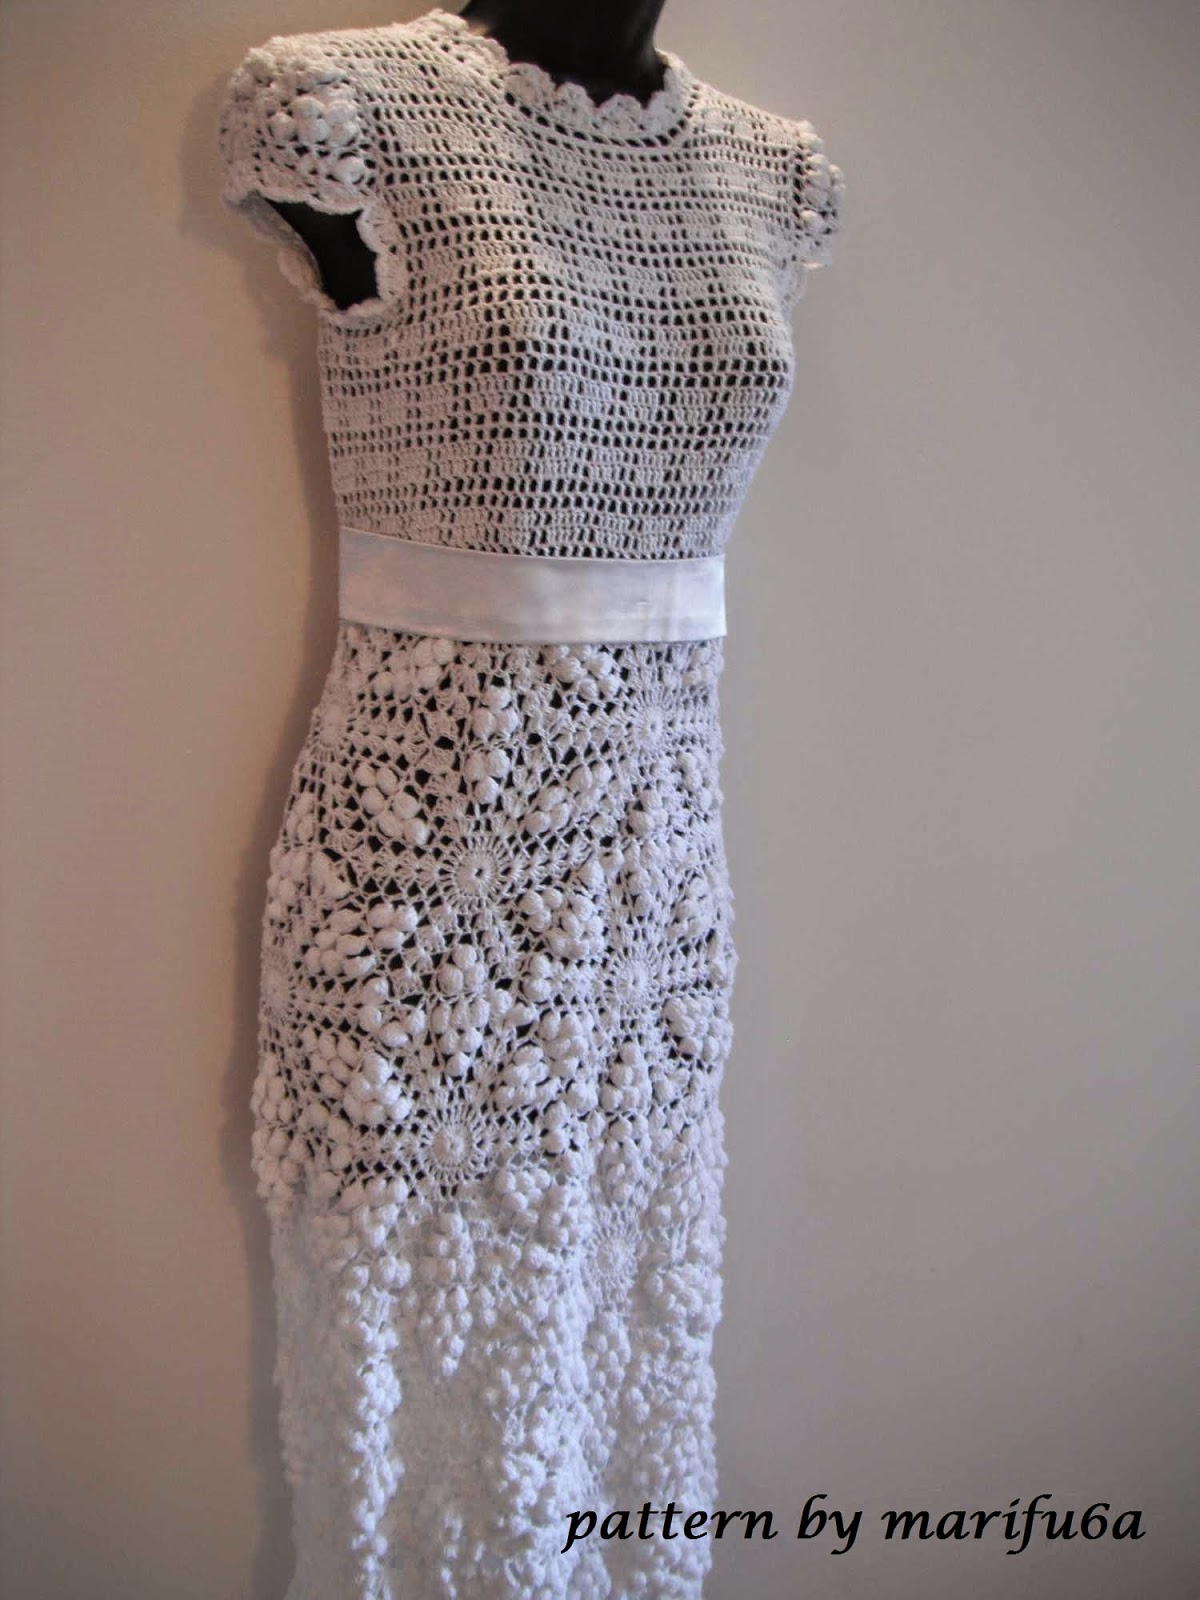 Free crochet patterns and video tutorials: HOW TO CROCHET WEDDING DRESS ...